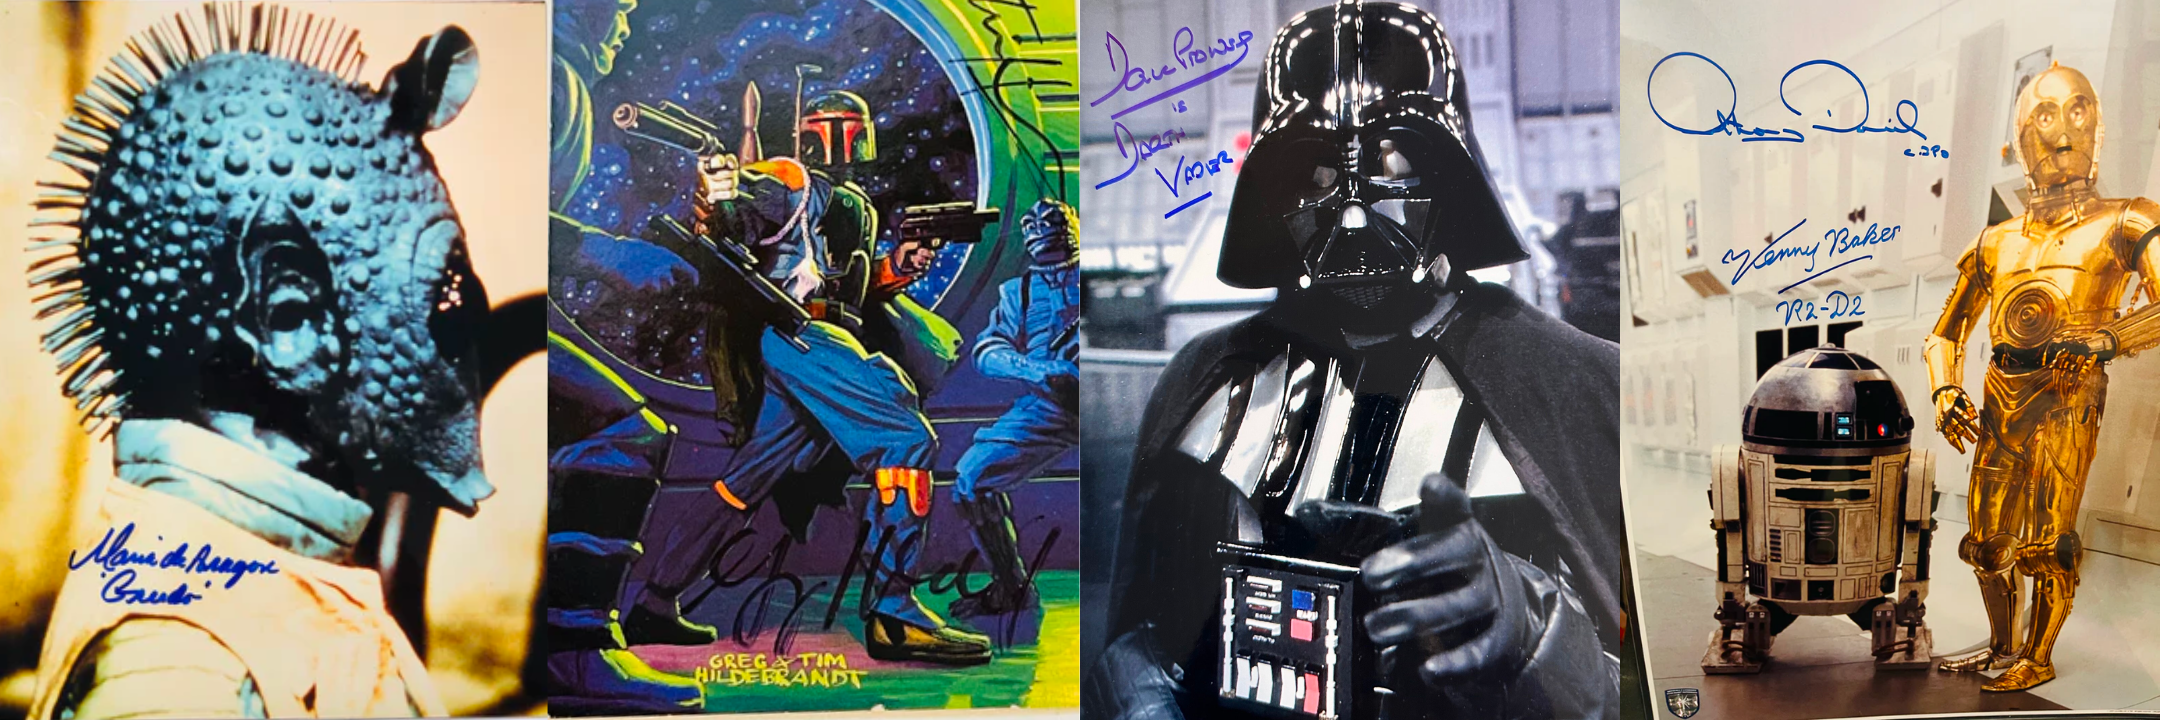 Star Wars Autographs